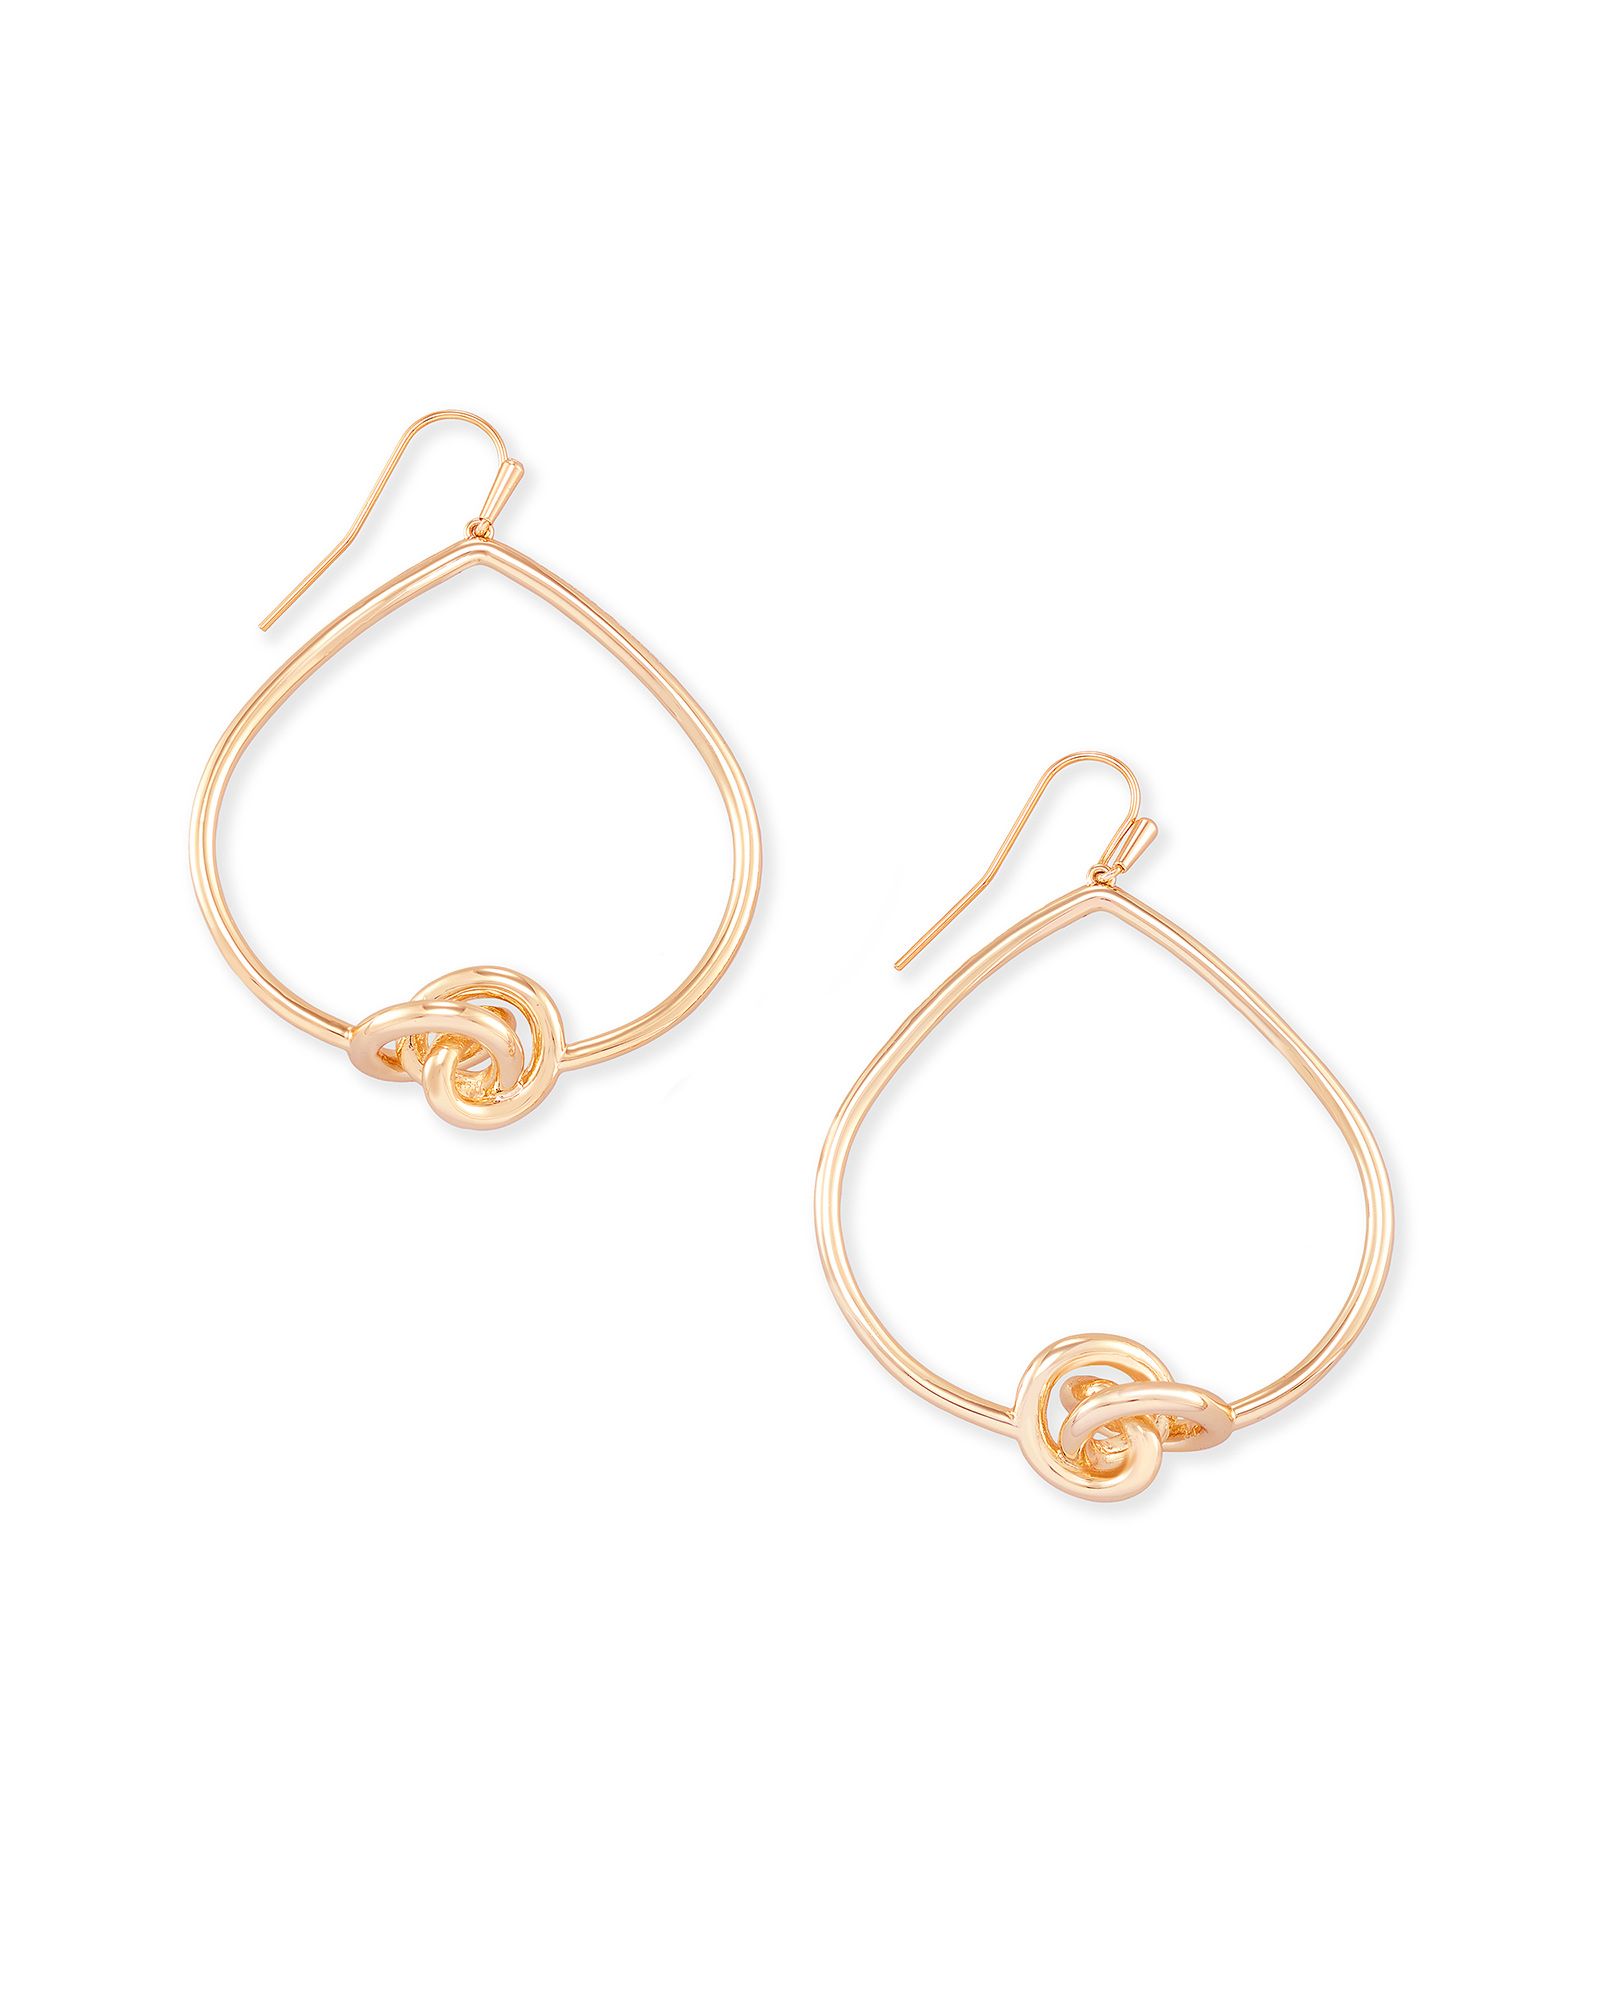 Presleigh Love Knot Open Frame Earrings in Rose Gold | Kendra Scott